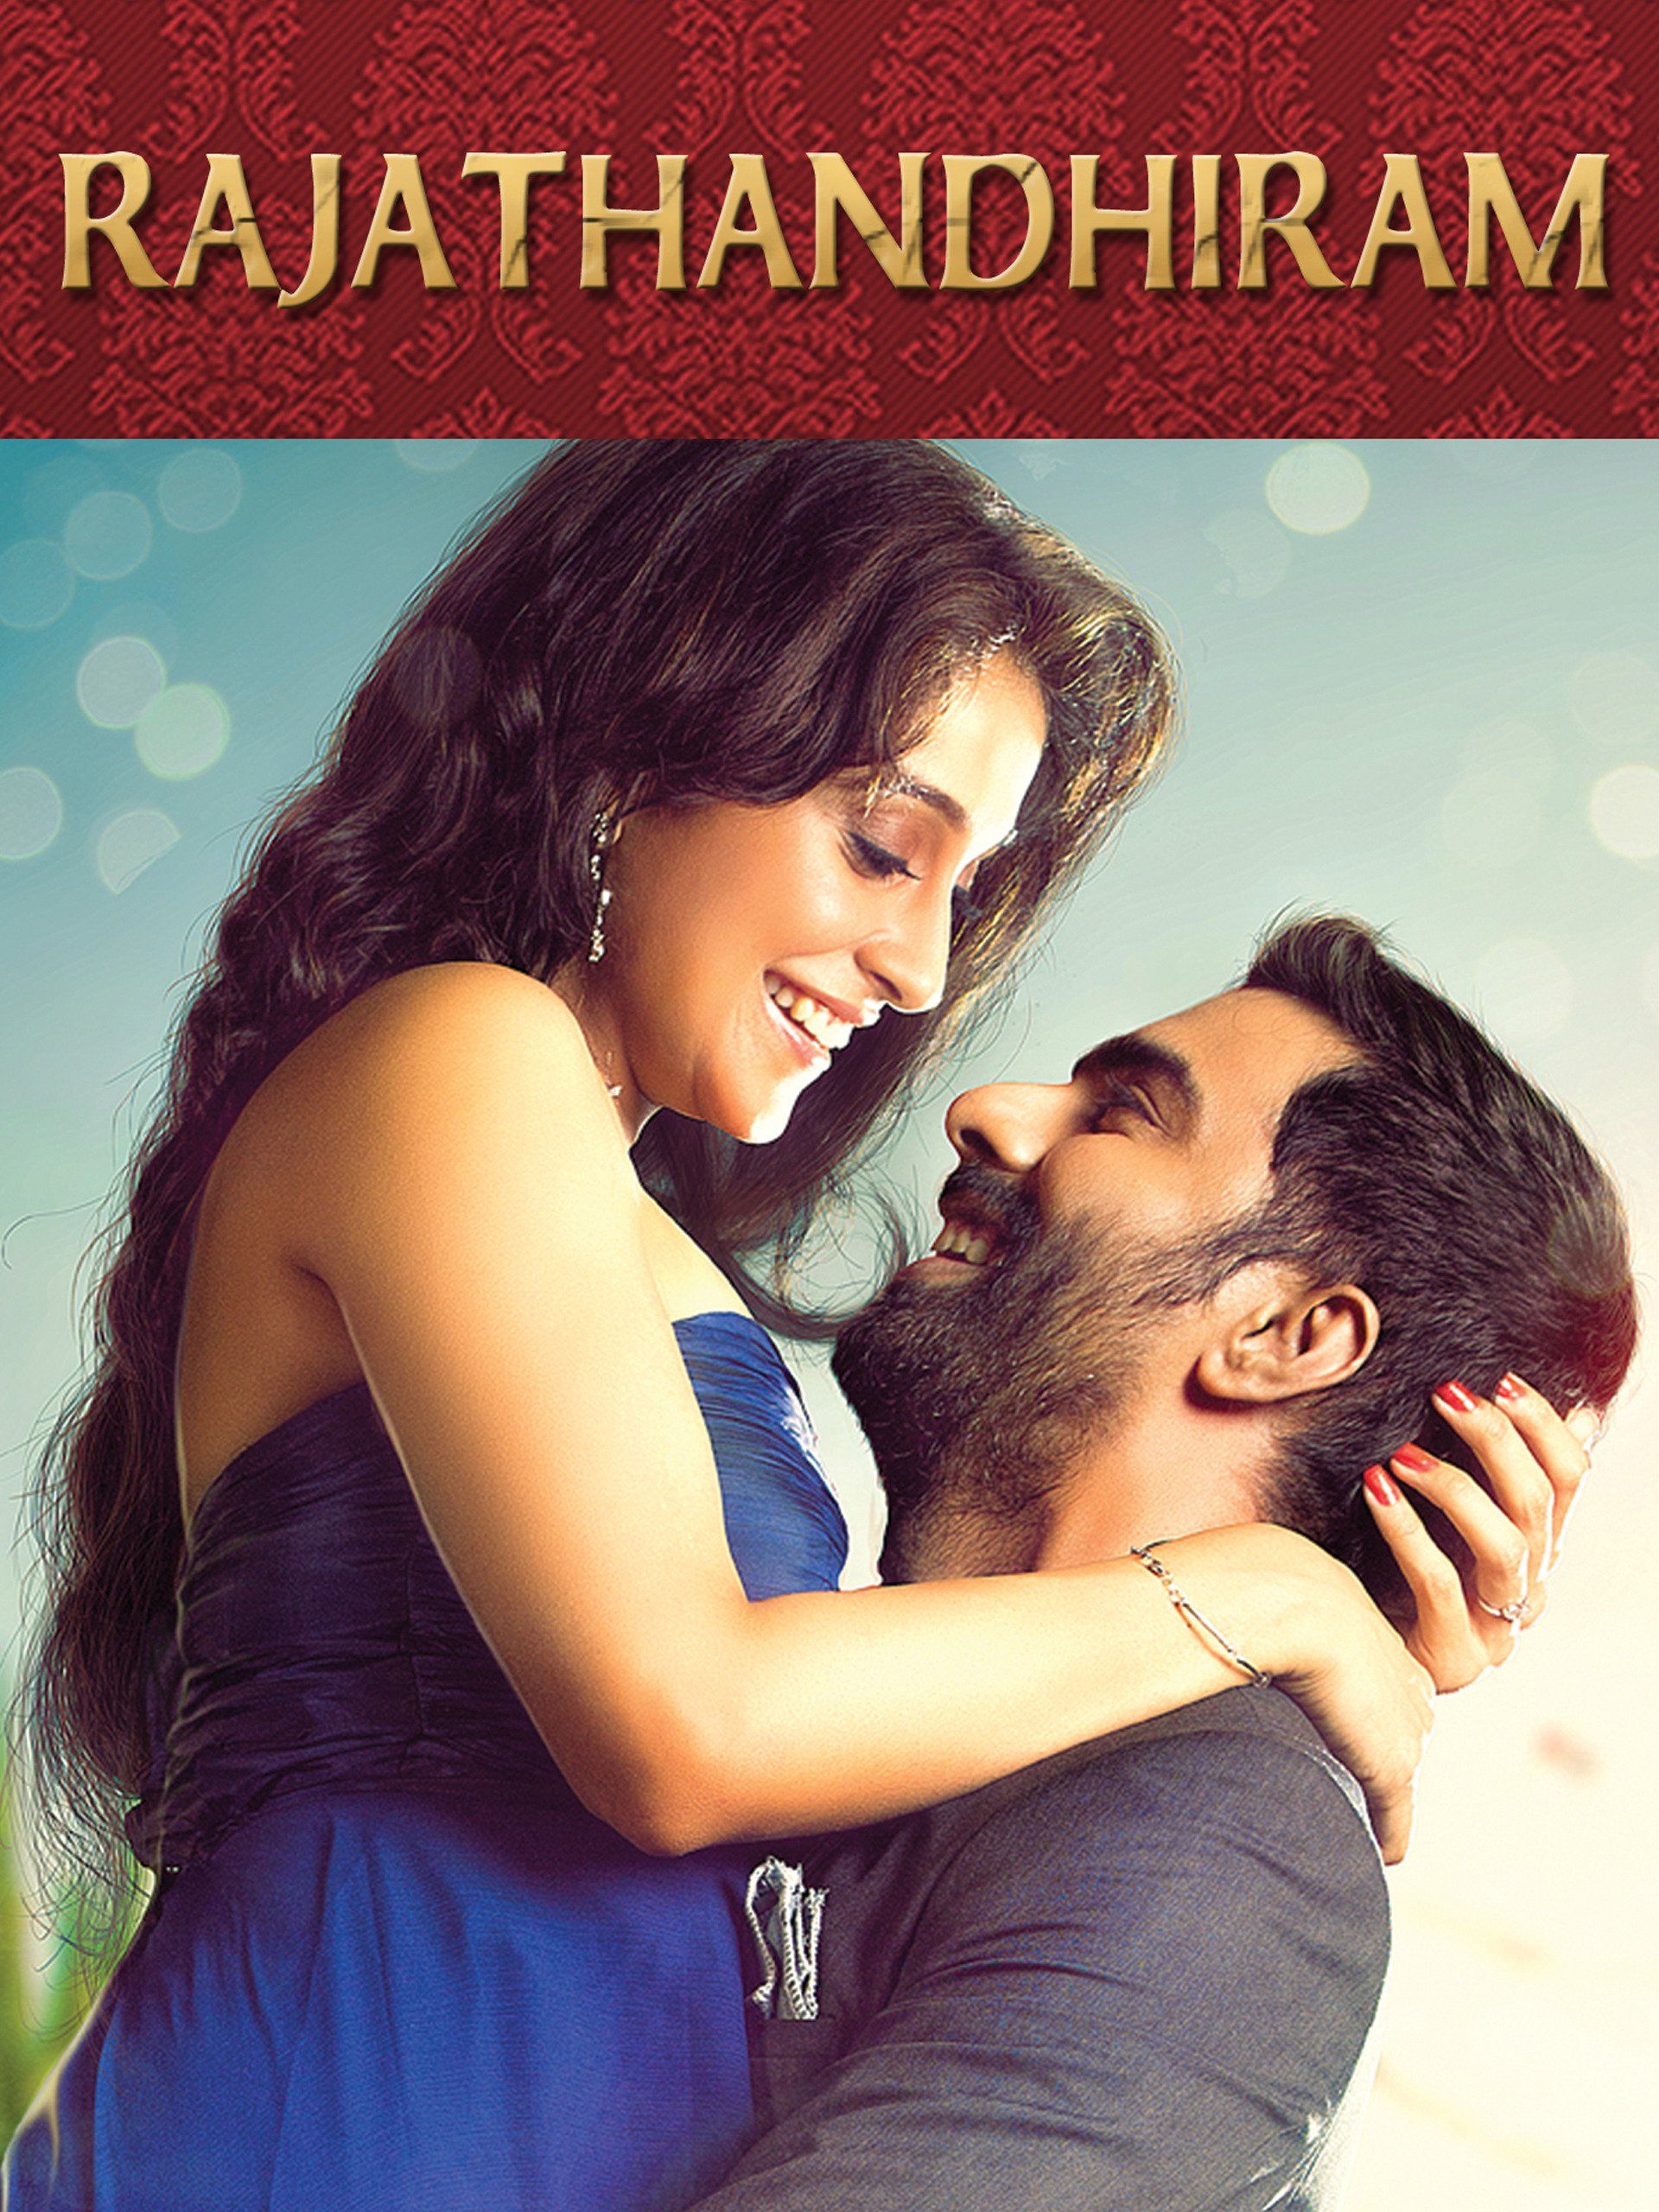 Rajathandhiram (2015) UNCUT Hindi Dubbed HDRip download full movie